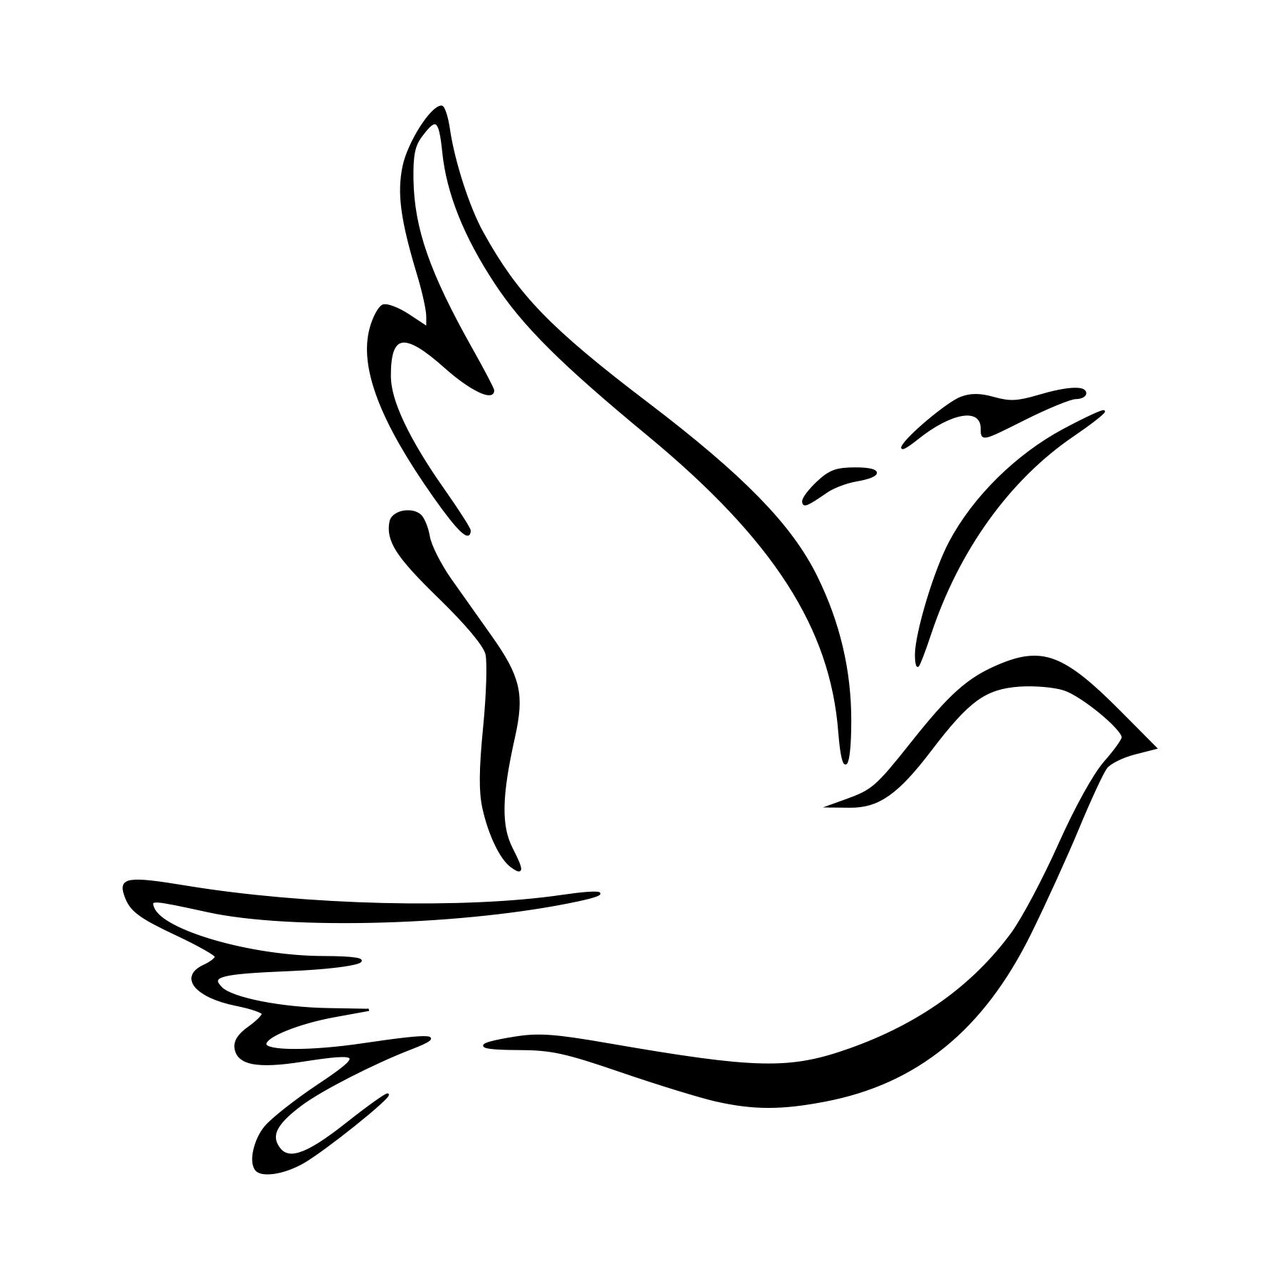 DOVE - Vinyl Decal Sticker - Bird Peace Love Pigeon - Minglewood Trading